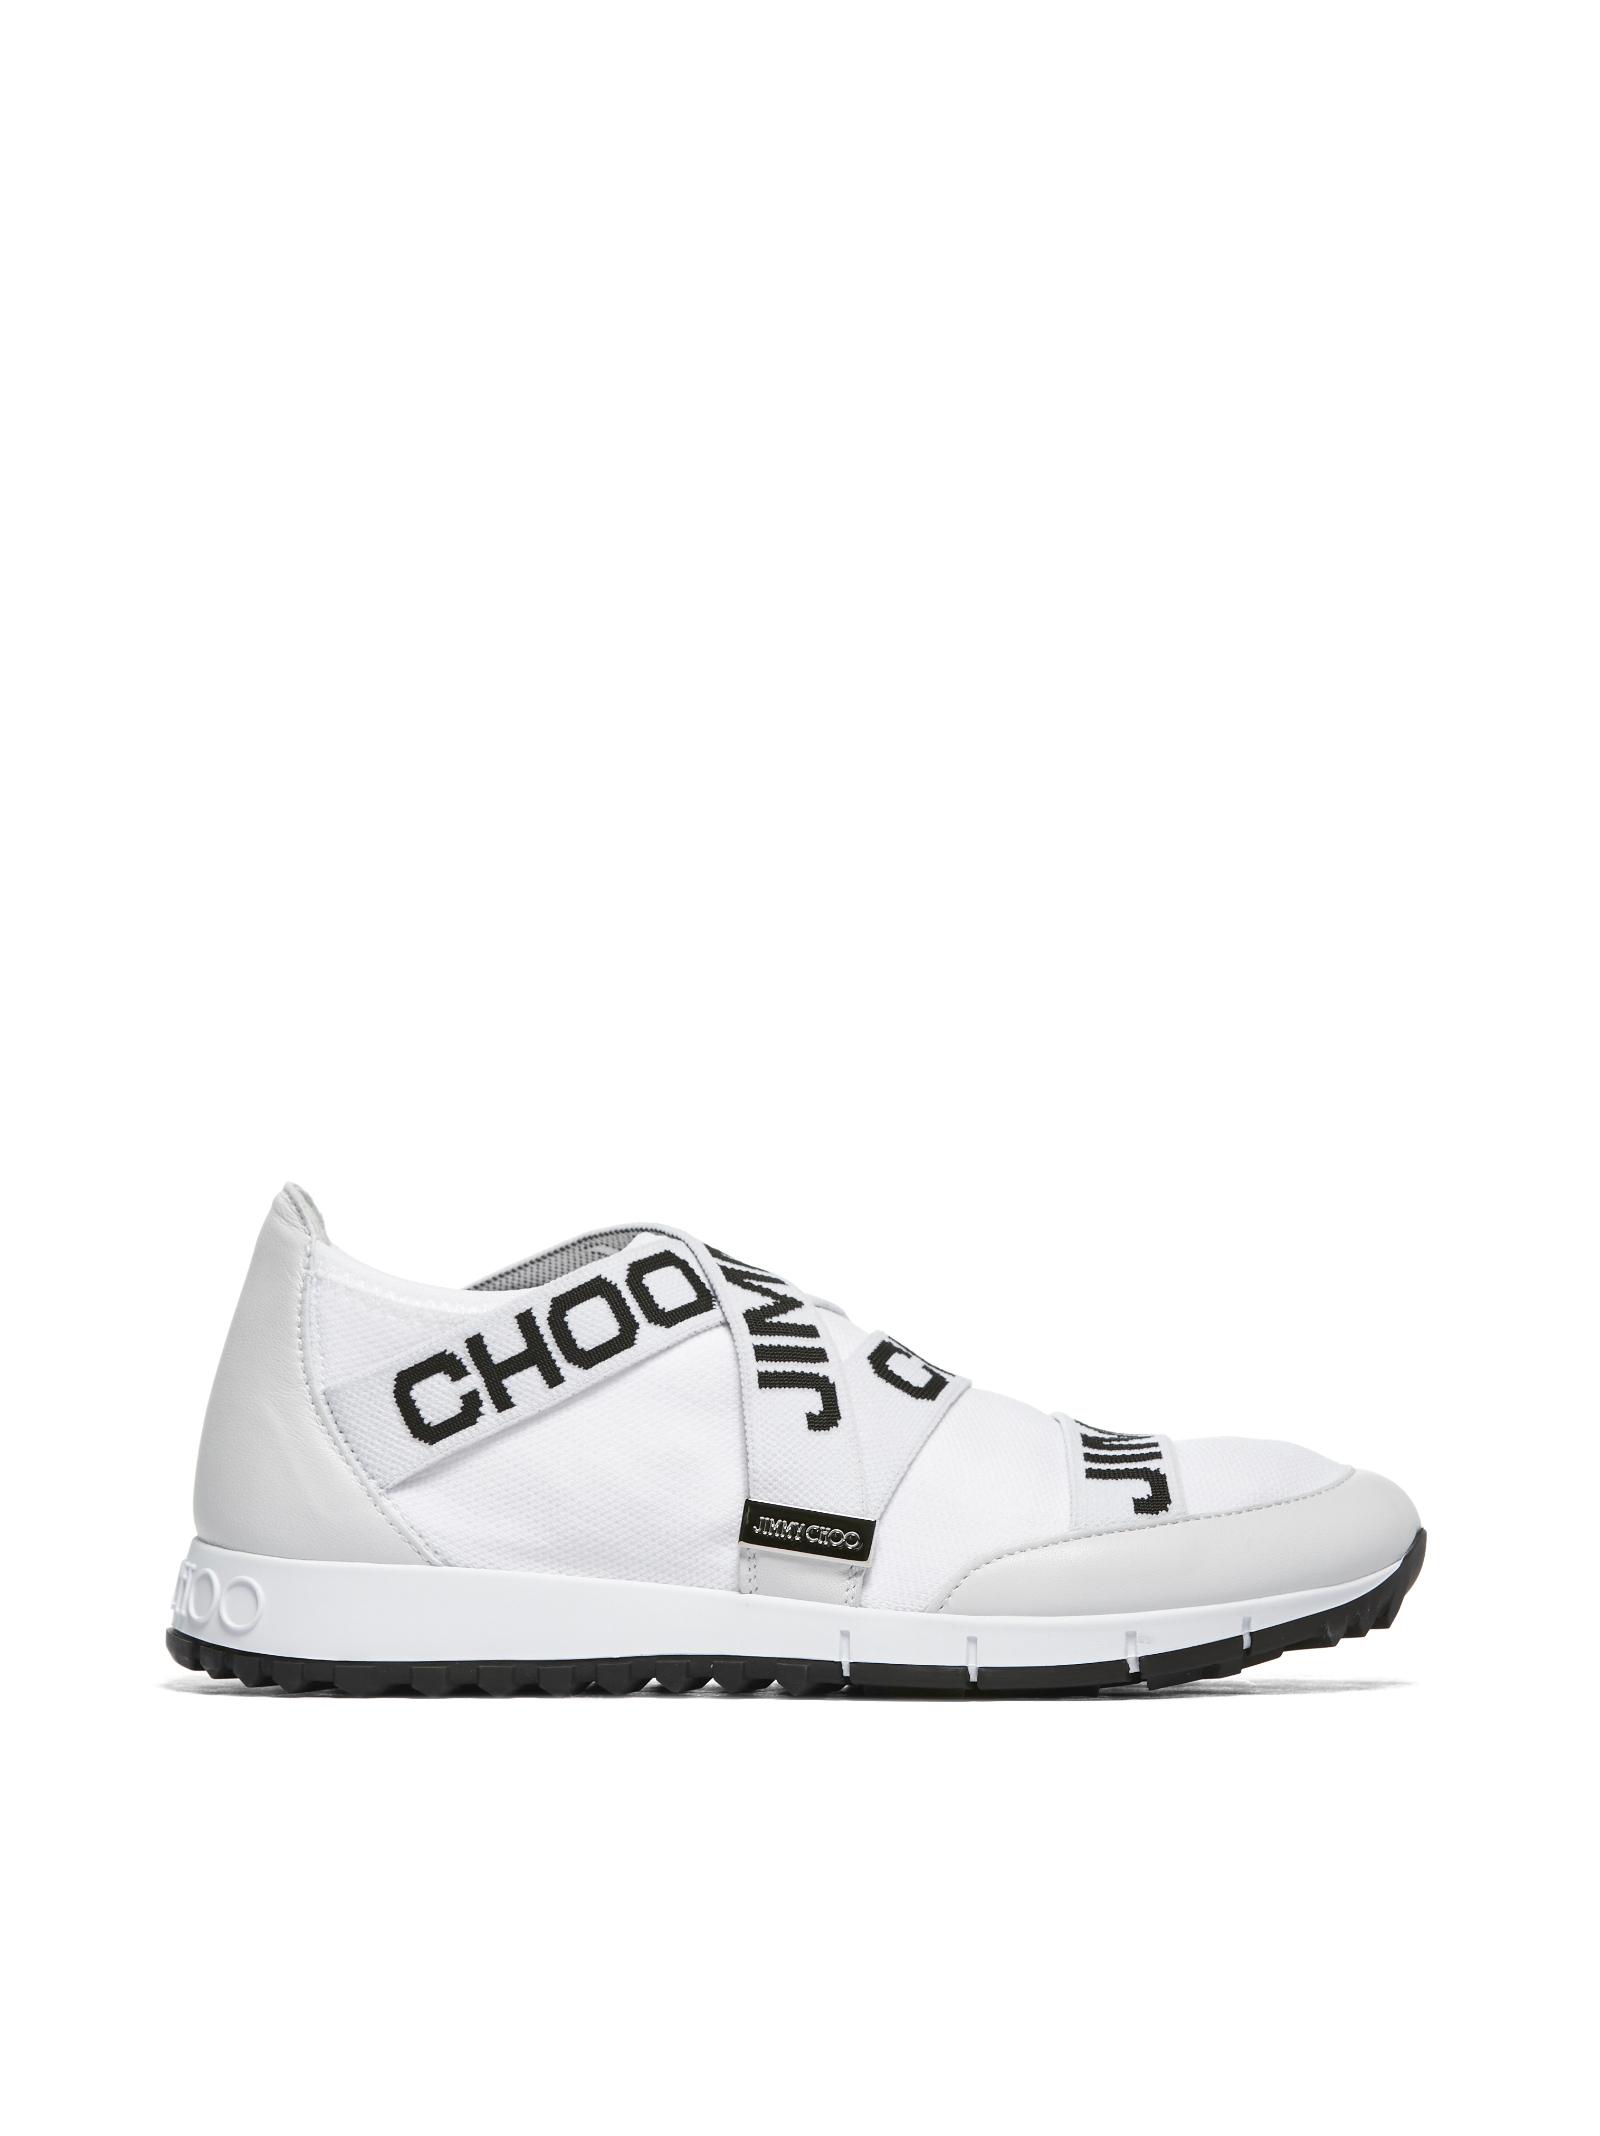 Jimmy Choo Rubber Toronto Sneakers Woman in White - Lyst